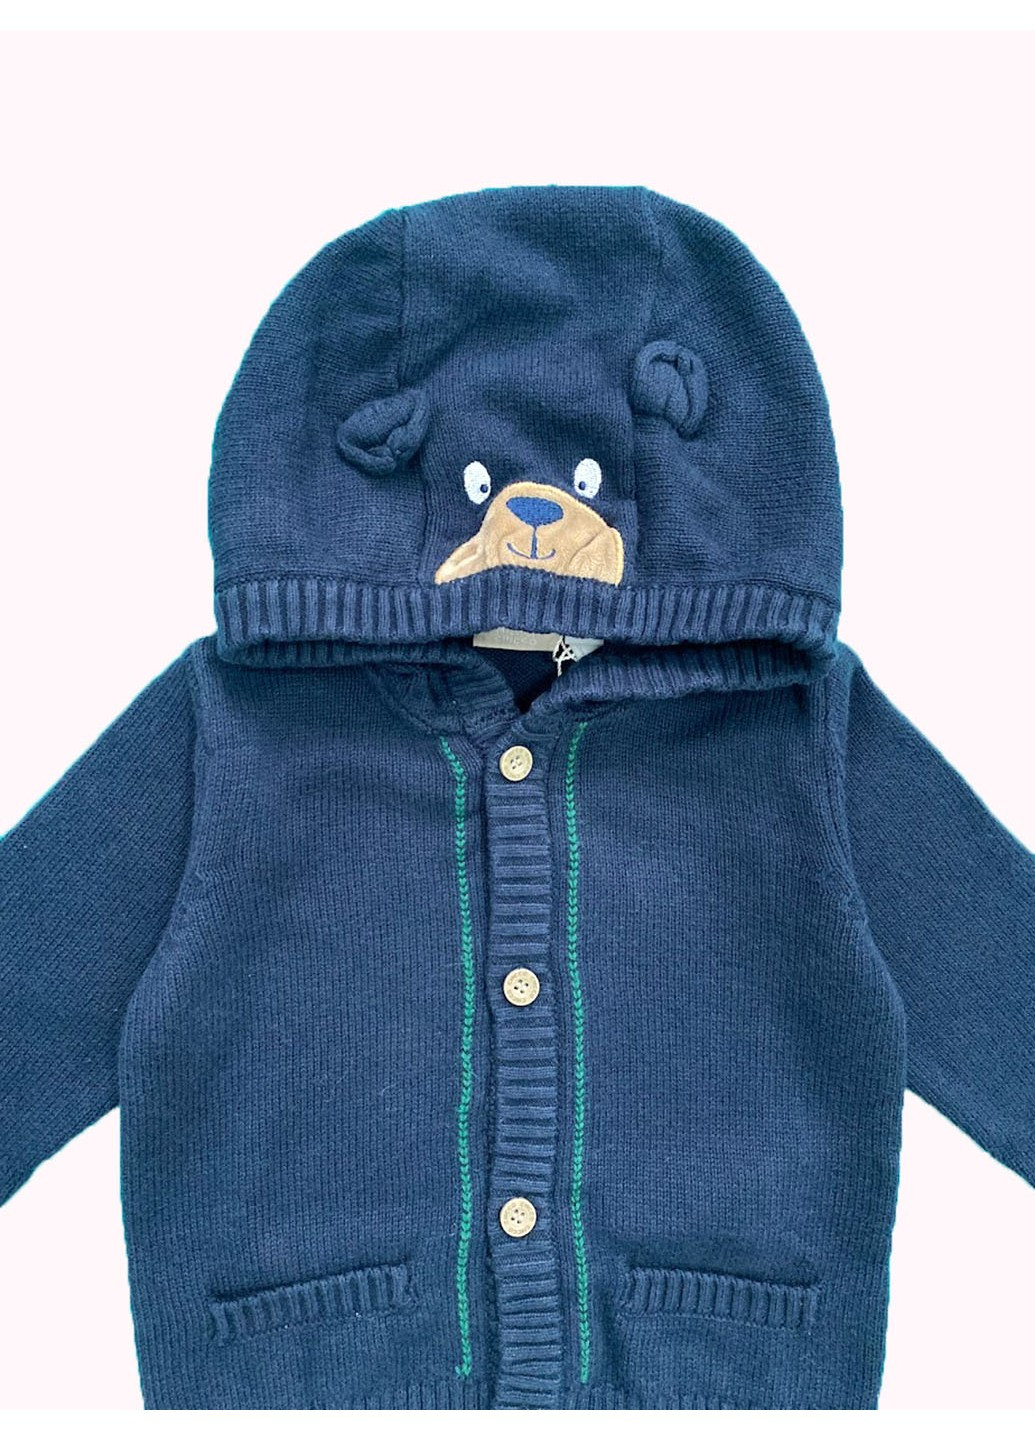 Синий свитер с капюшоном мишка Chicco